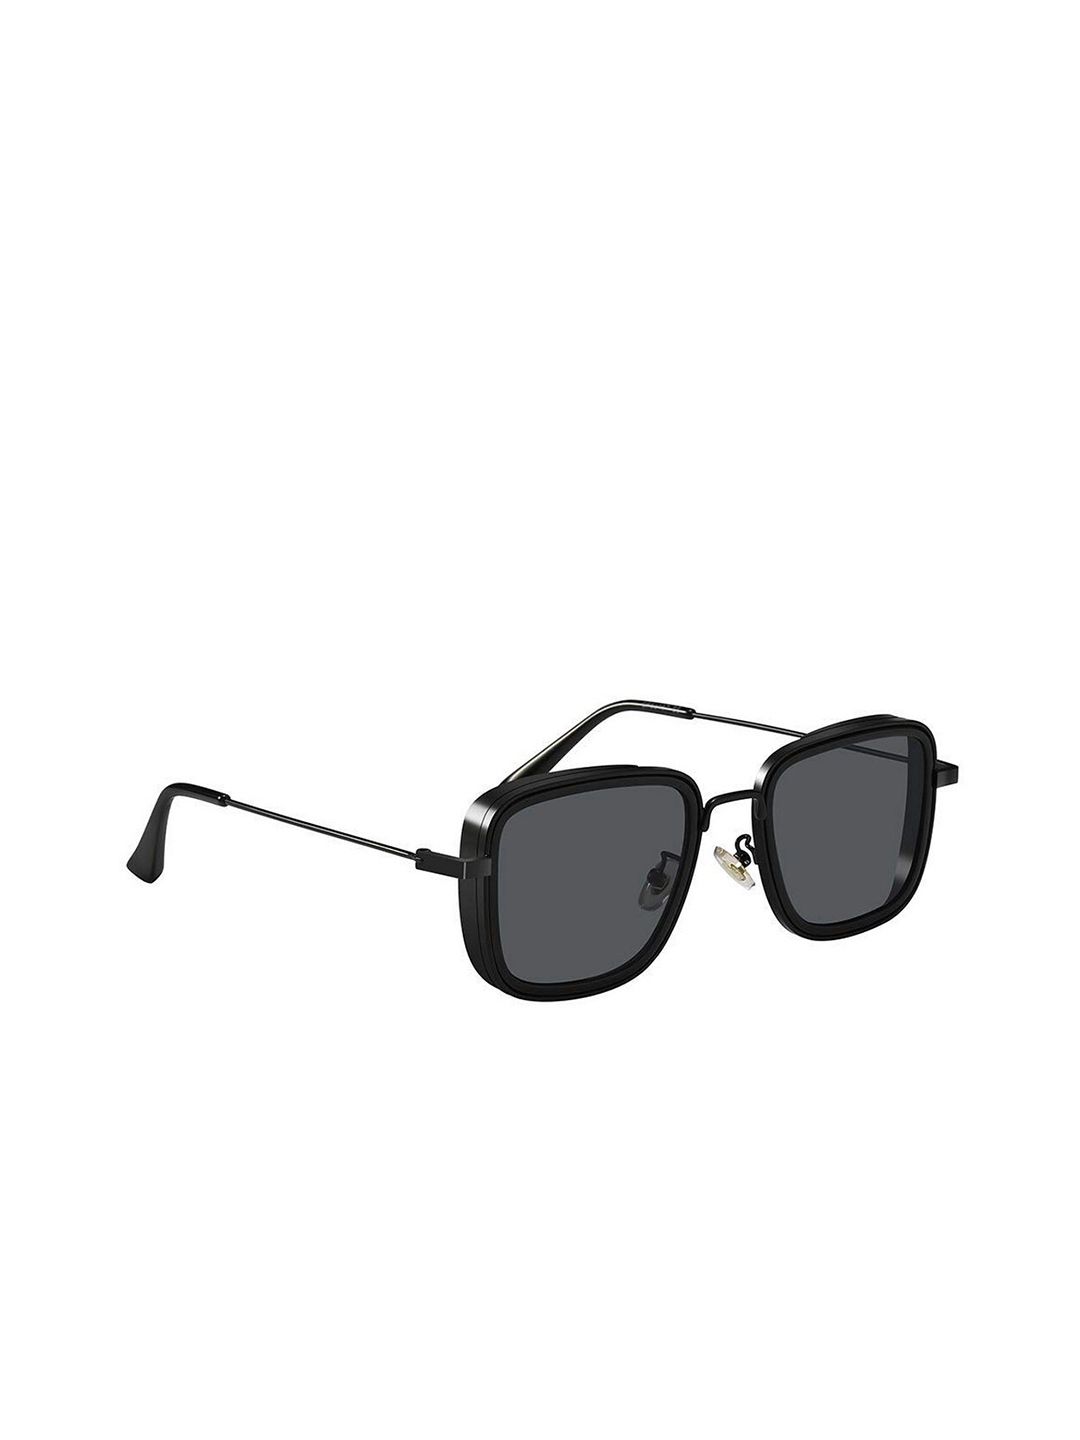 Creature Unisex Black Lens Square Sunglasses with UV Protected Lens Price in India